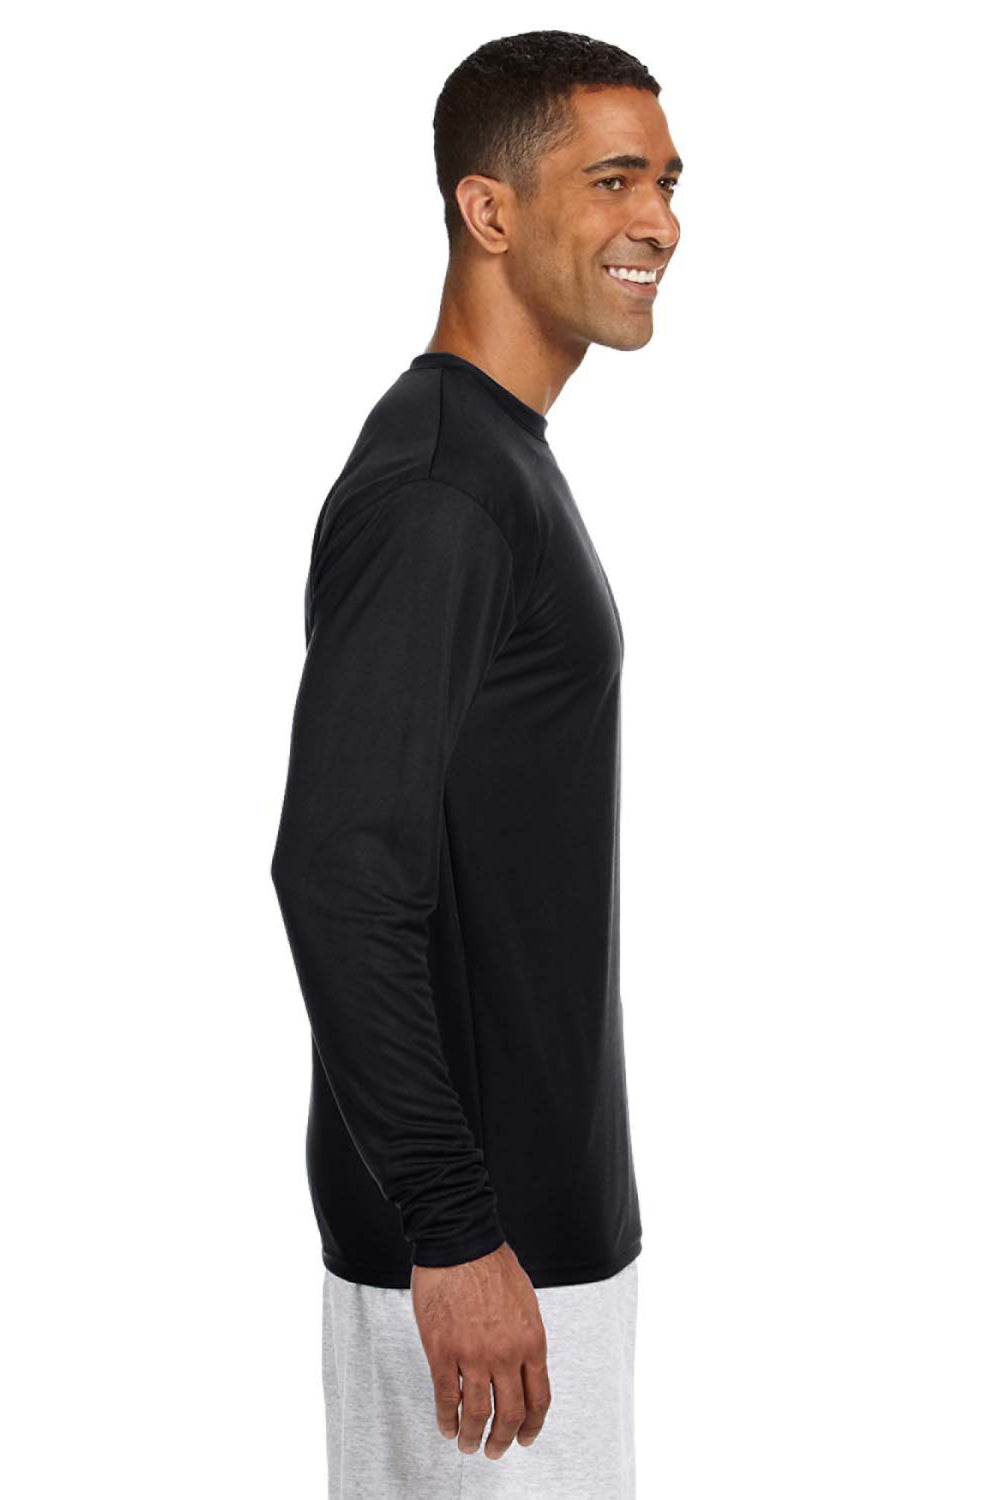 A4 N3165 Mens Performance Moisture Wicking Long Sleeve Crewneck T-Shirt Black Model Side